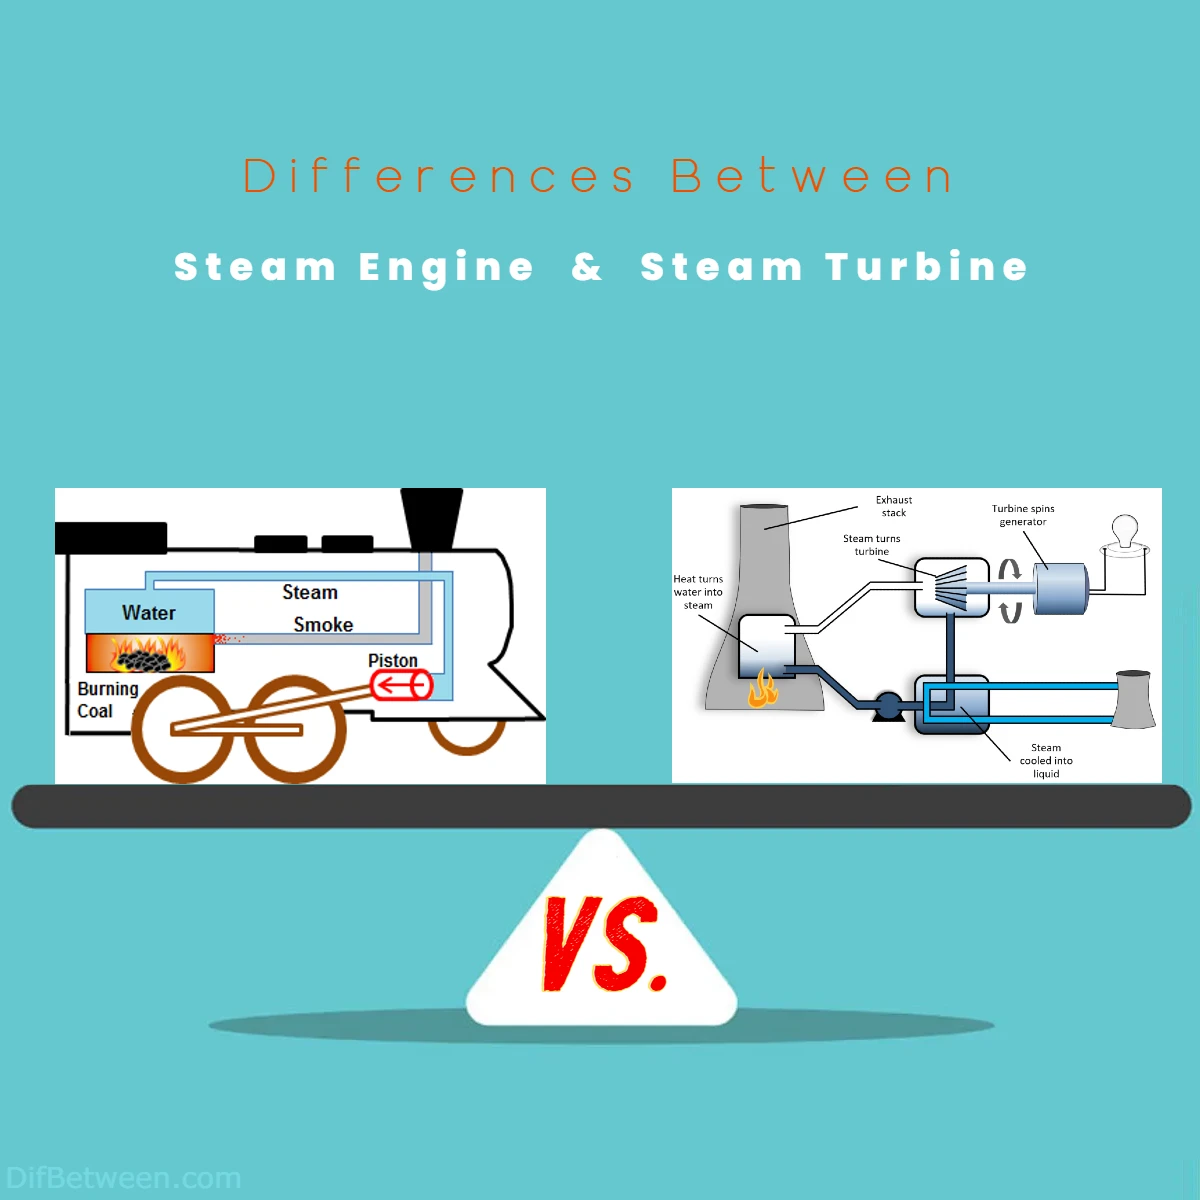 Differences Between Steam Engine vs Steam Turbine